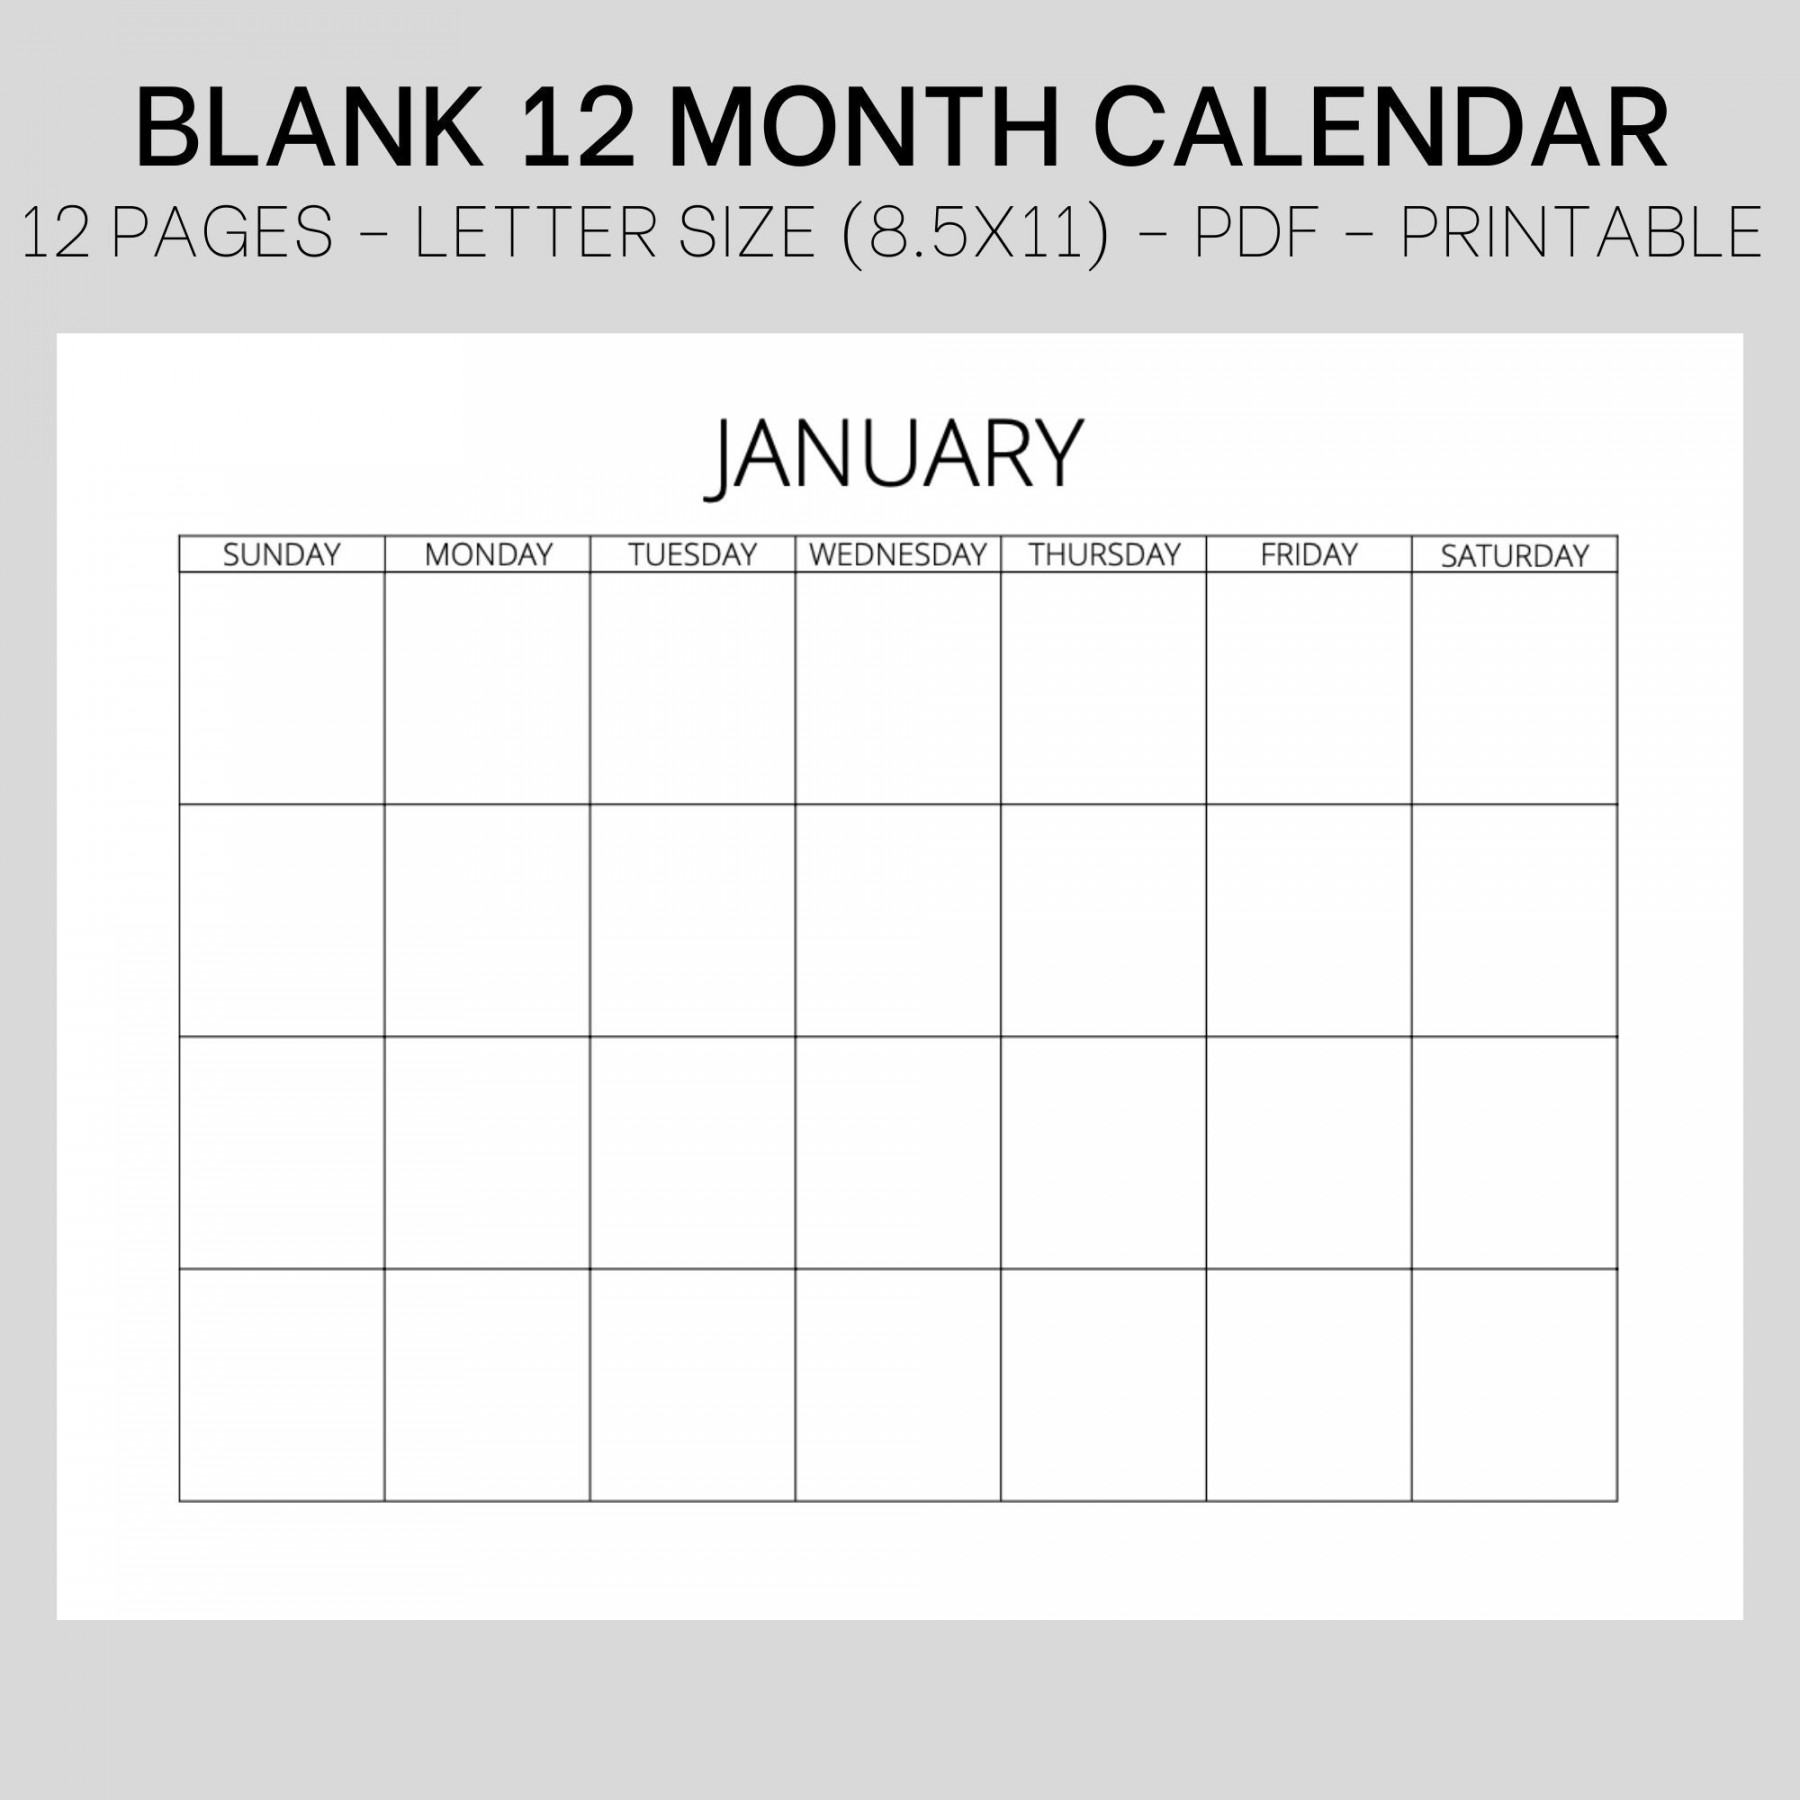 Calendar, Calendar Template, Calendar Printable, Blank Calendar